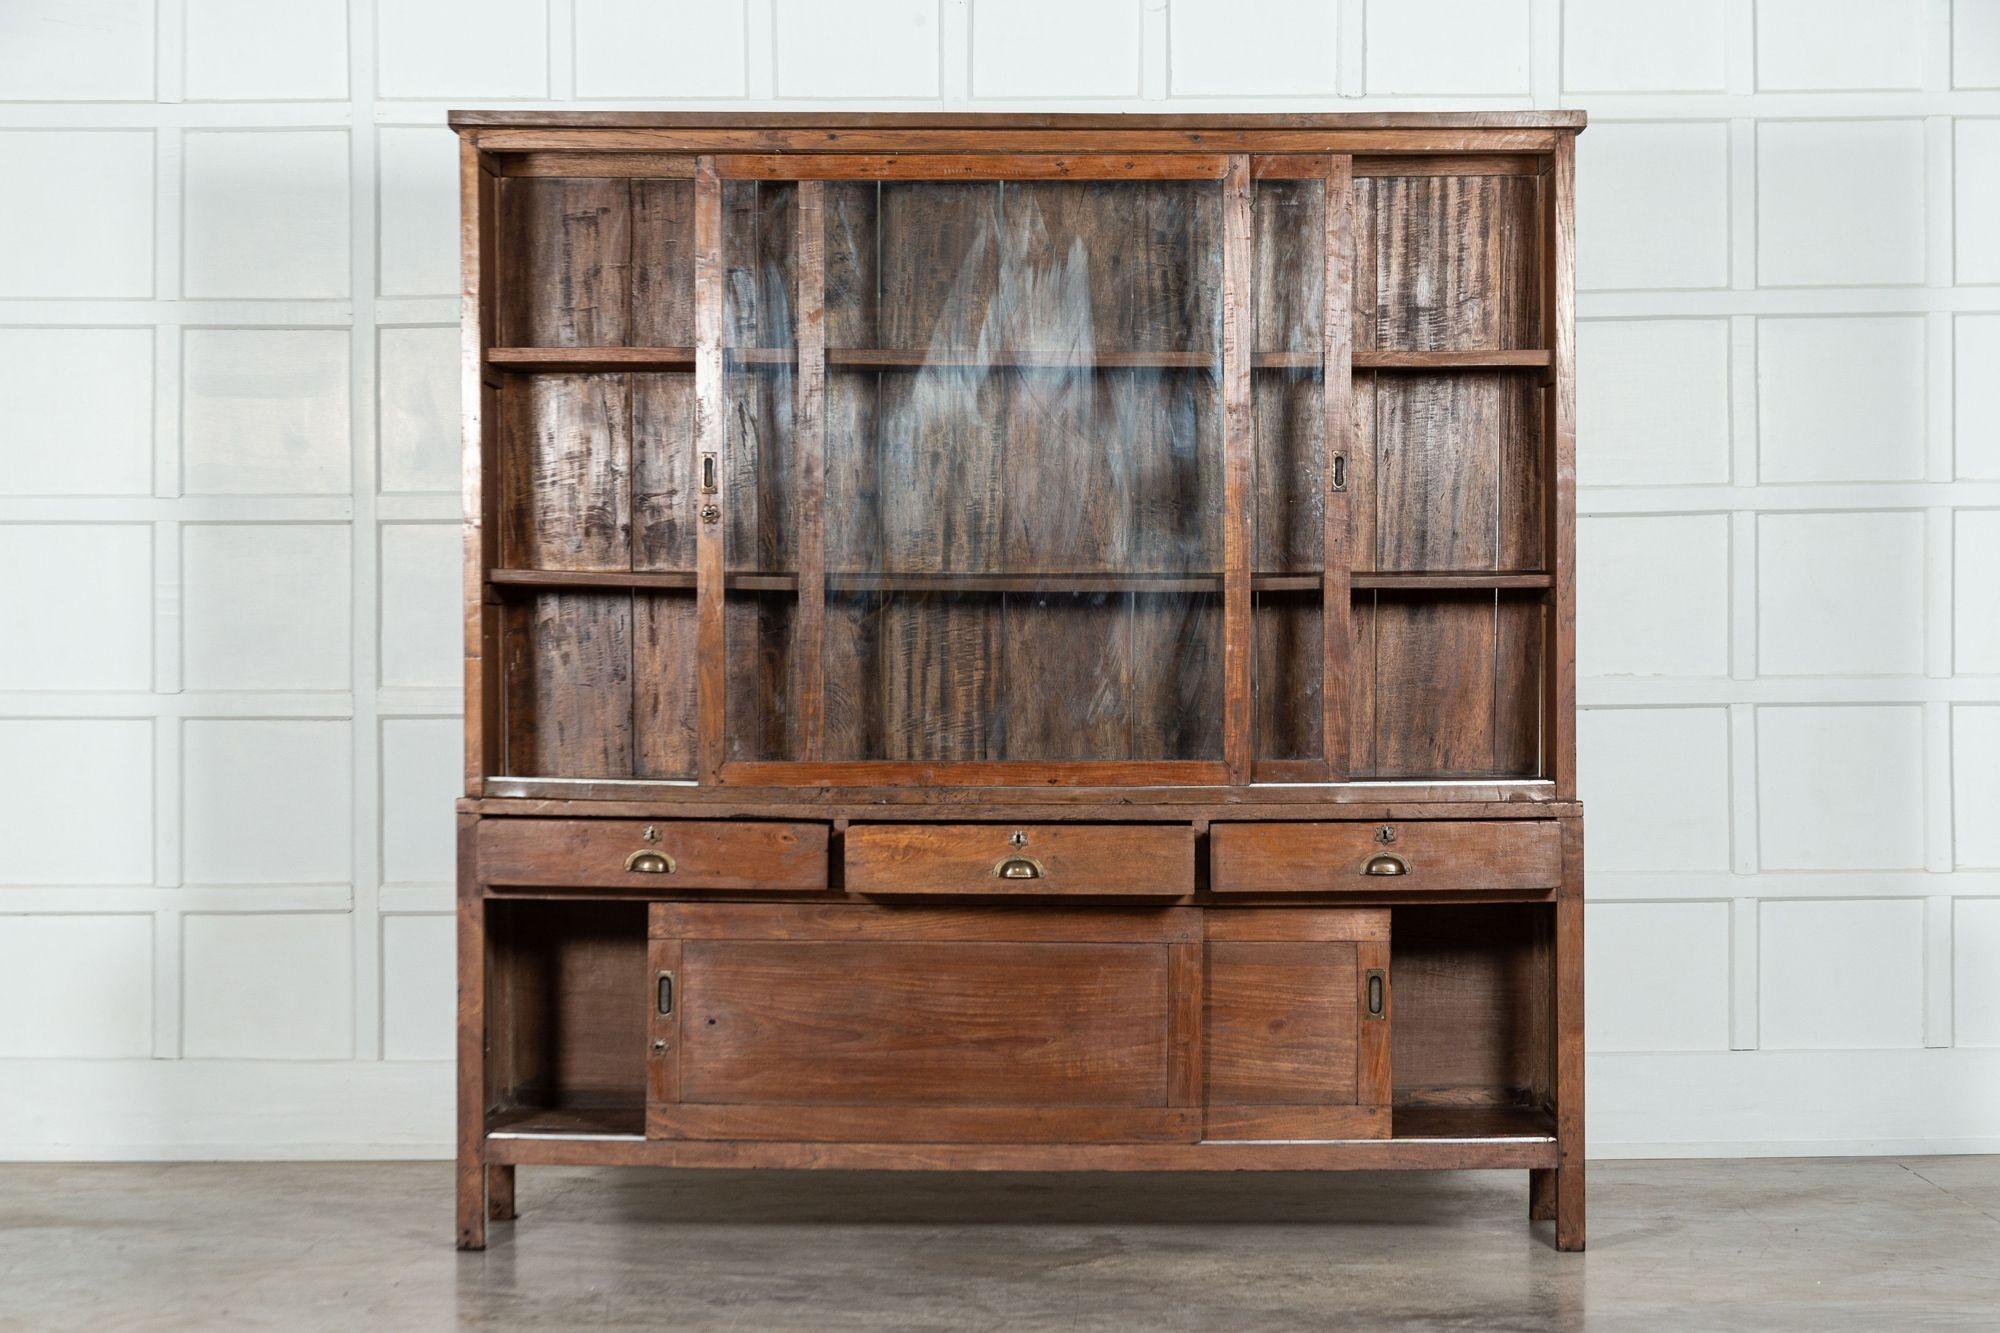 Large French Oak Glazed Haberdashery Shop Cabinet, circa 1900
sku 1507
W204 x D50 x H203 cm.